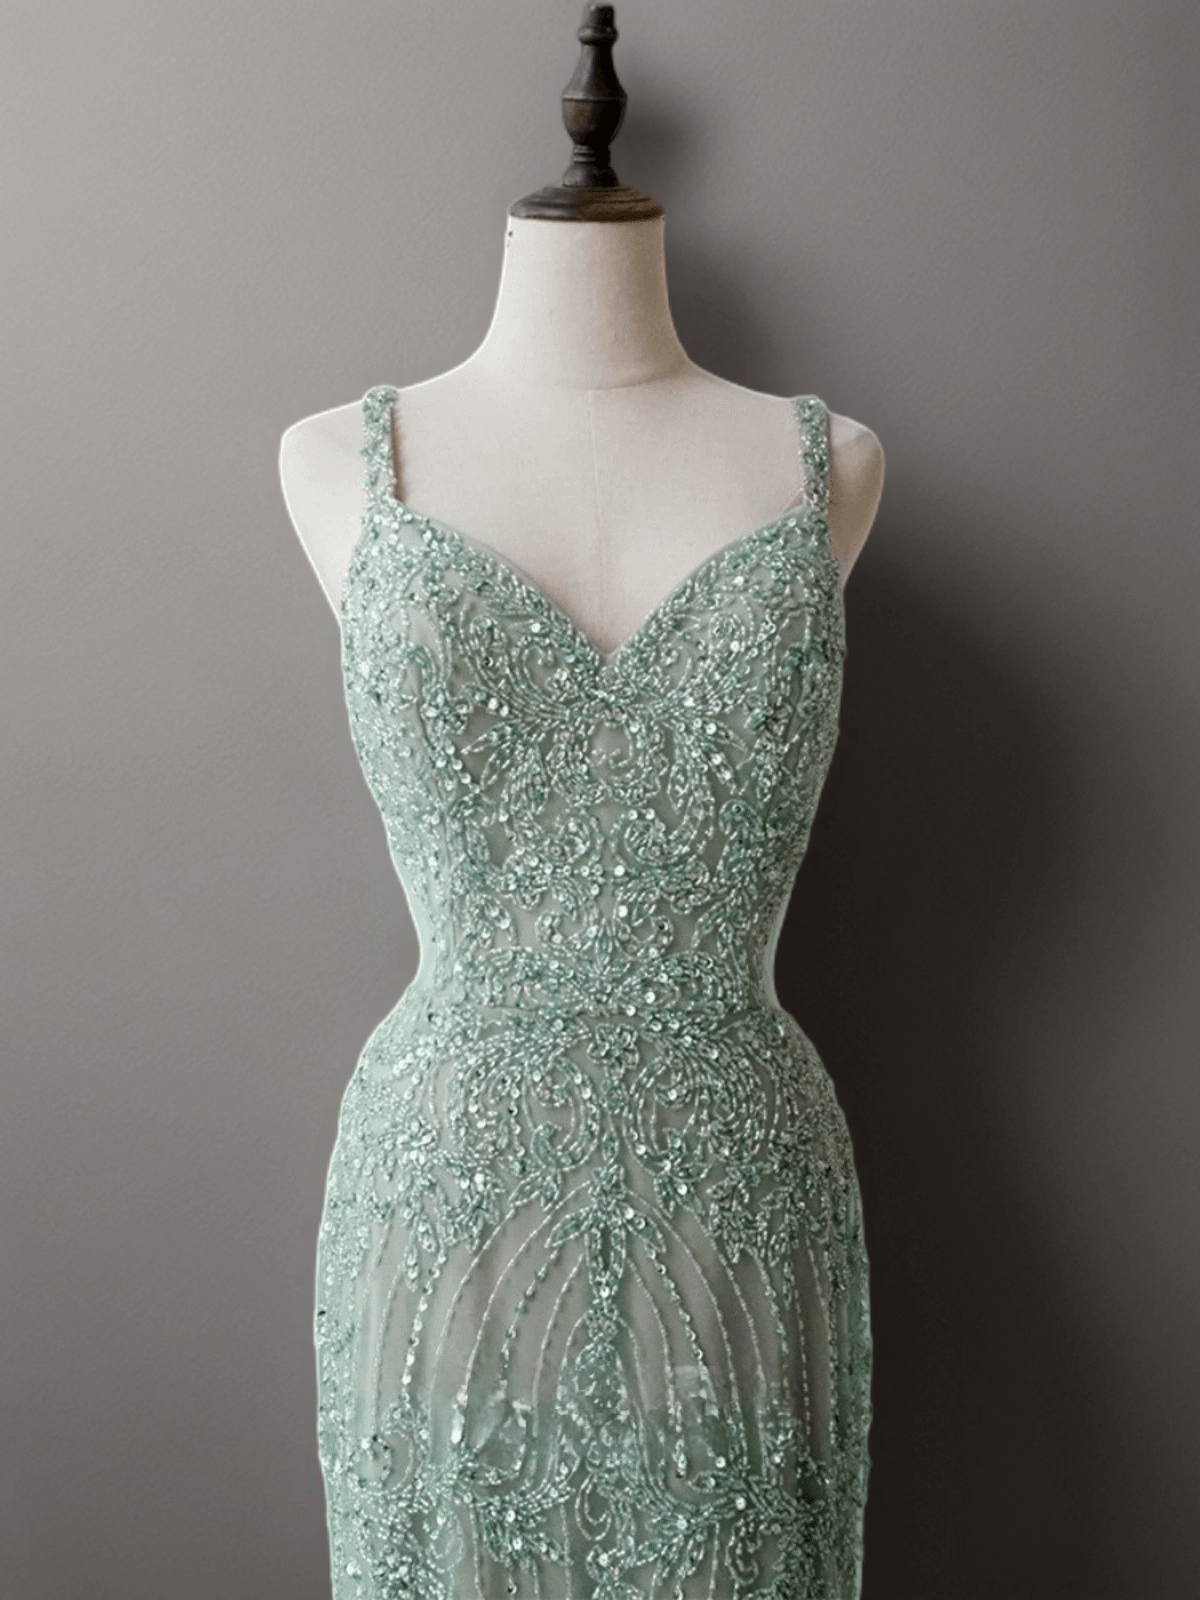 Mint Green Pretty Sequin and Beaded Spaghetti Strap Dress - Elegant Sequin Evening Gown Plus Size - WonderlandByLilian